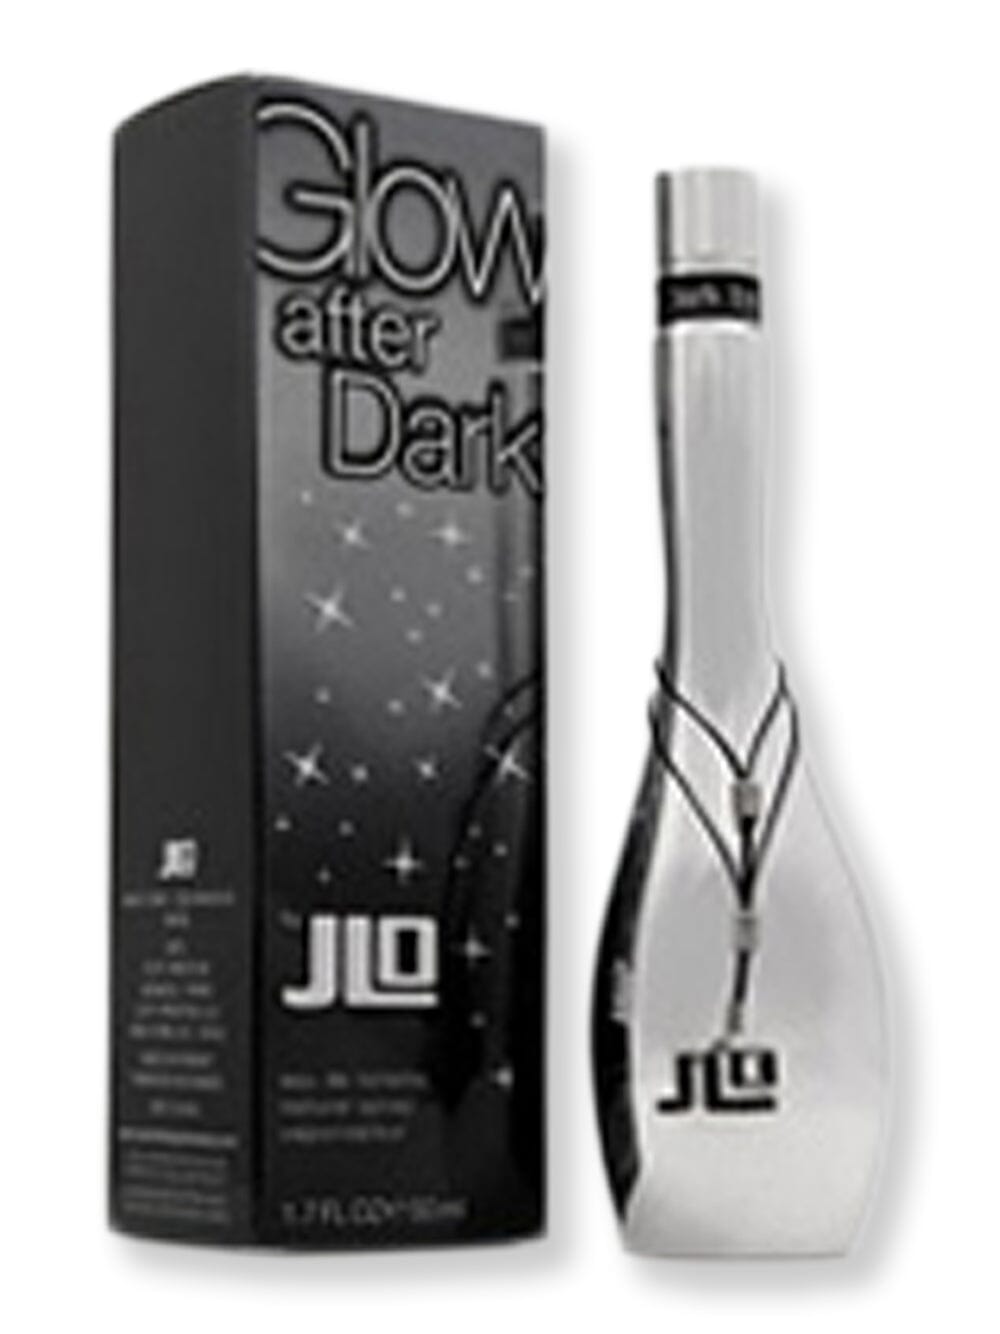 Jennifer Lopez Jennifer Lopez Glow After Dark EDT Spray 1.7 oz Perfume 